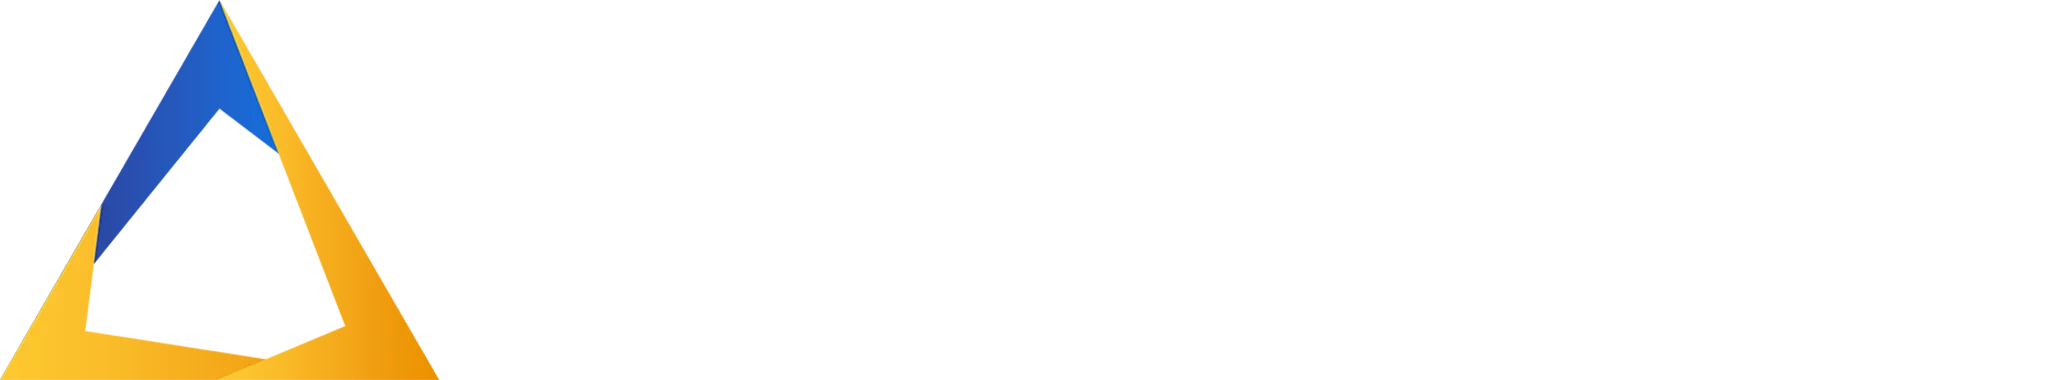 AAA Auditors horizontal logo with white logotype.